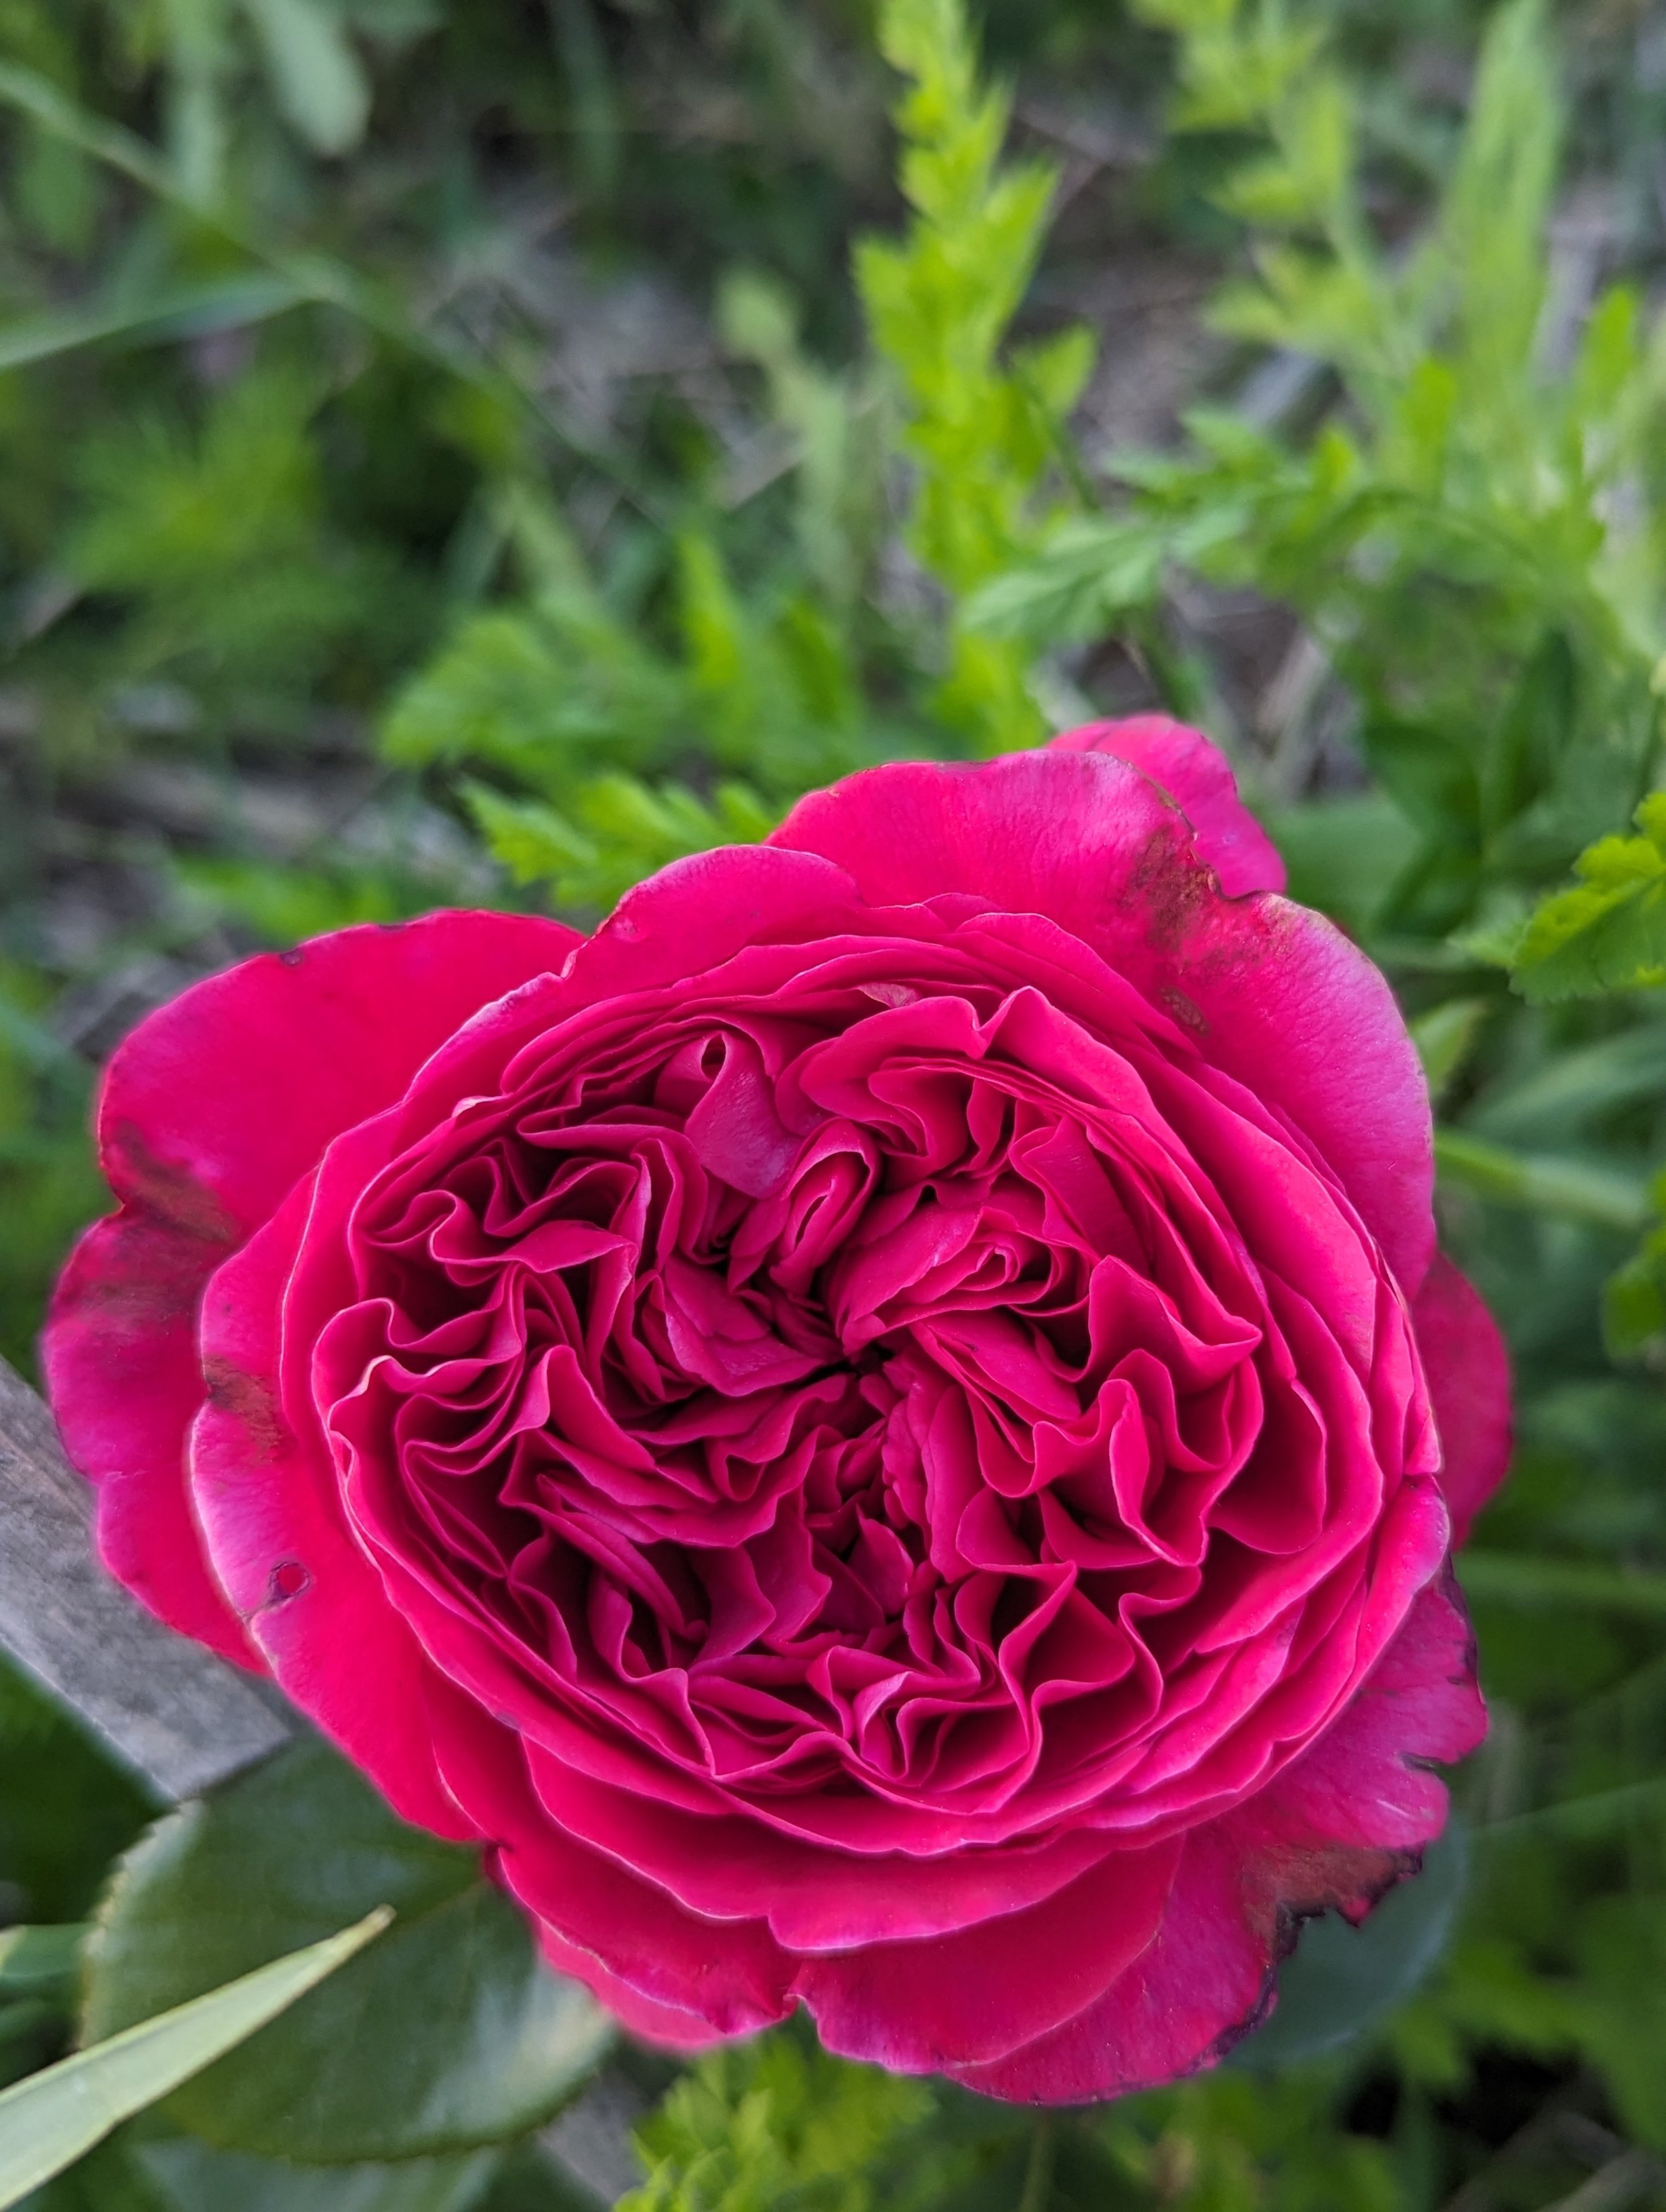 jewel tone garden roses dew lily farm colorado.jpg